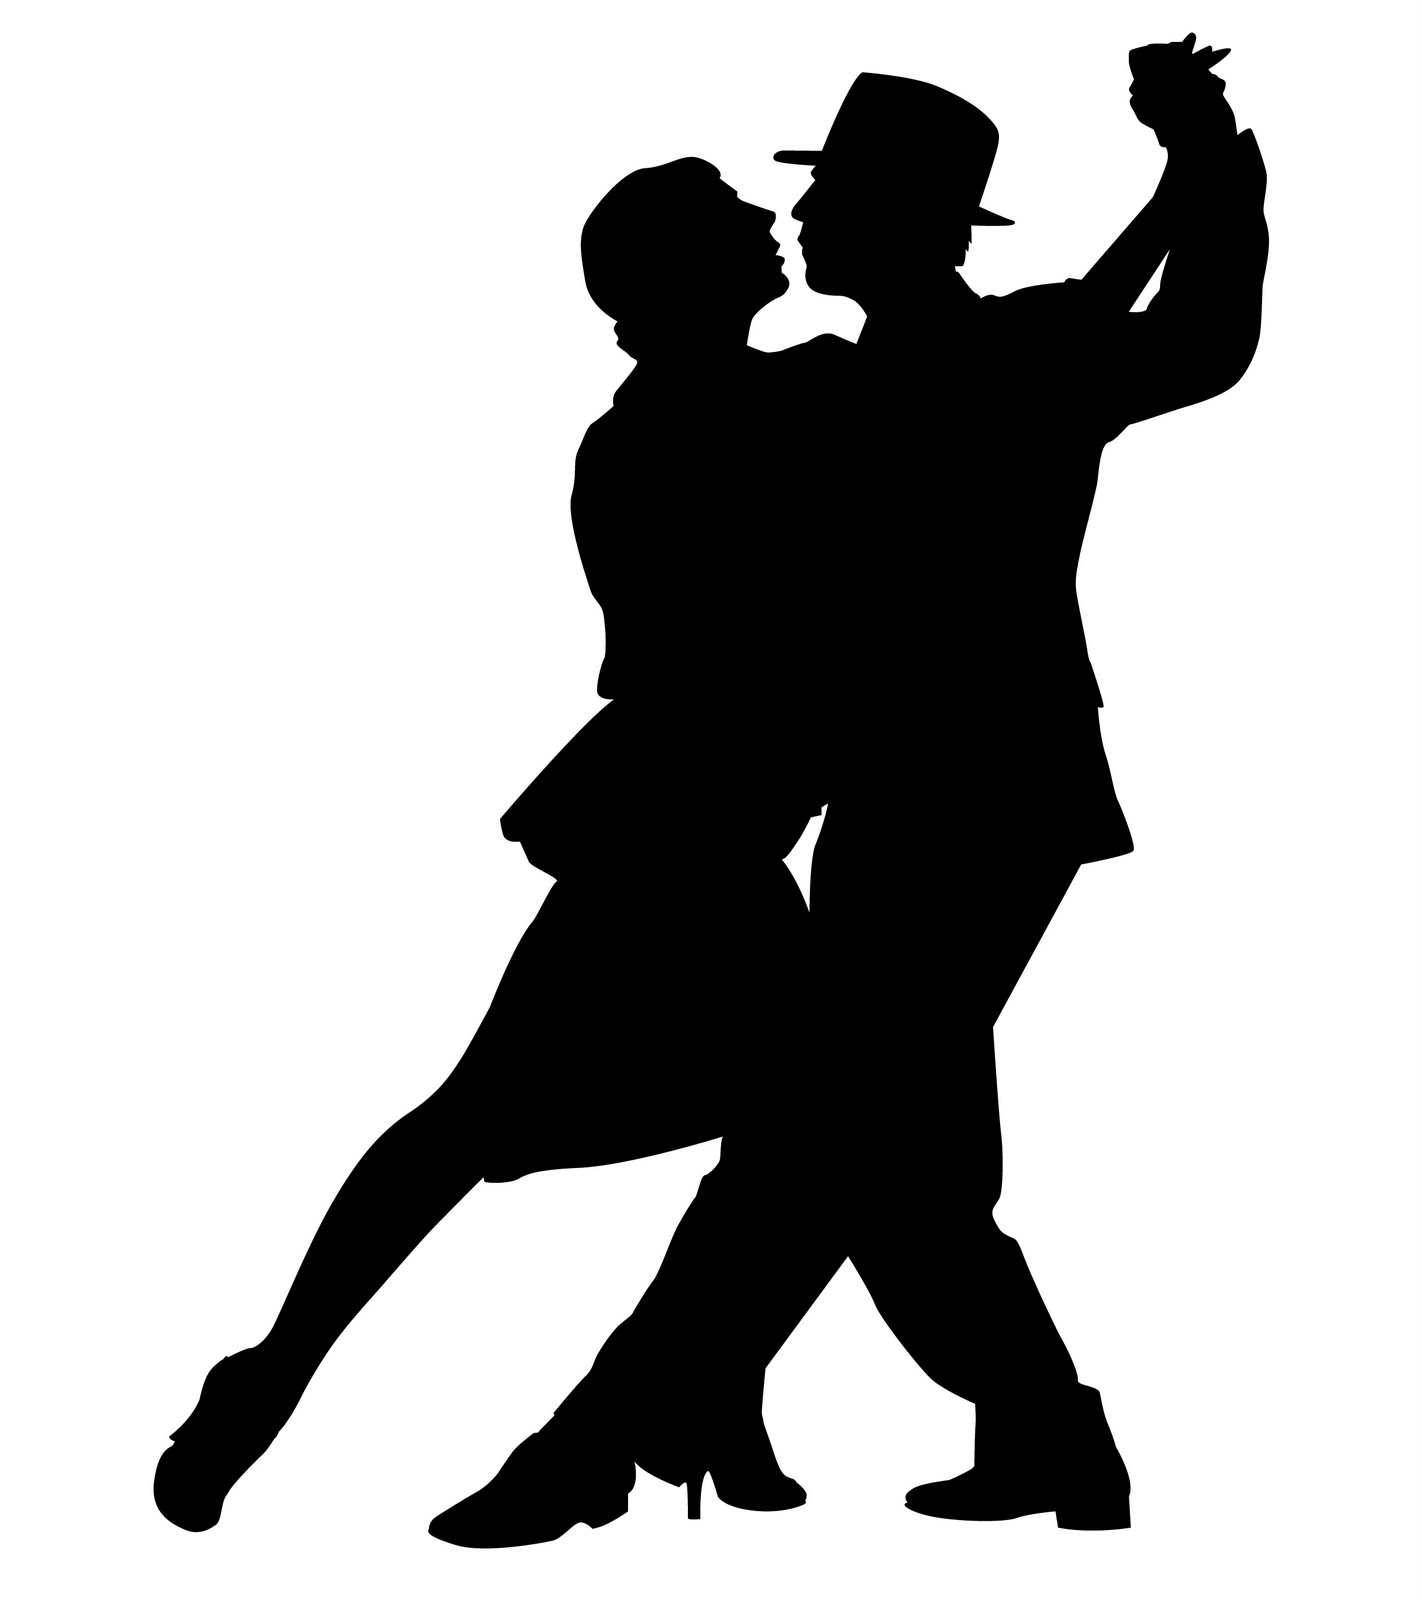 Dance Silhouette Images   Clipart Best